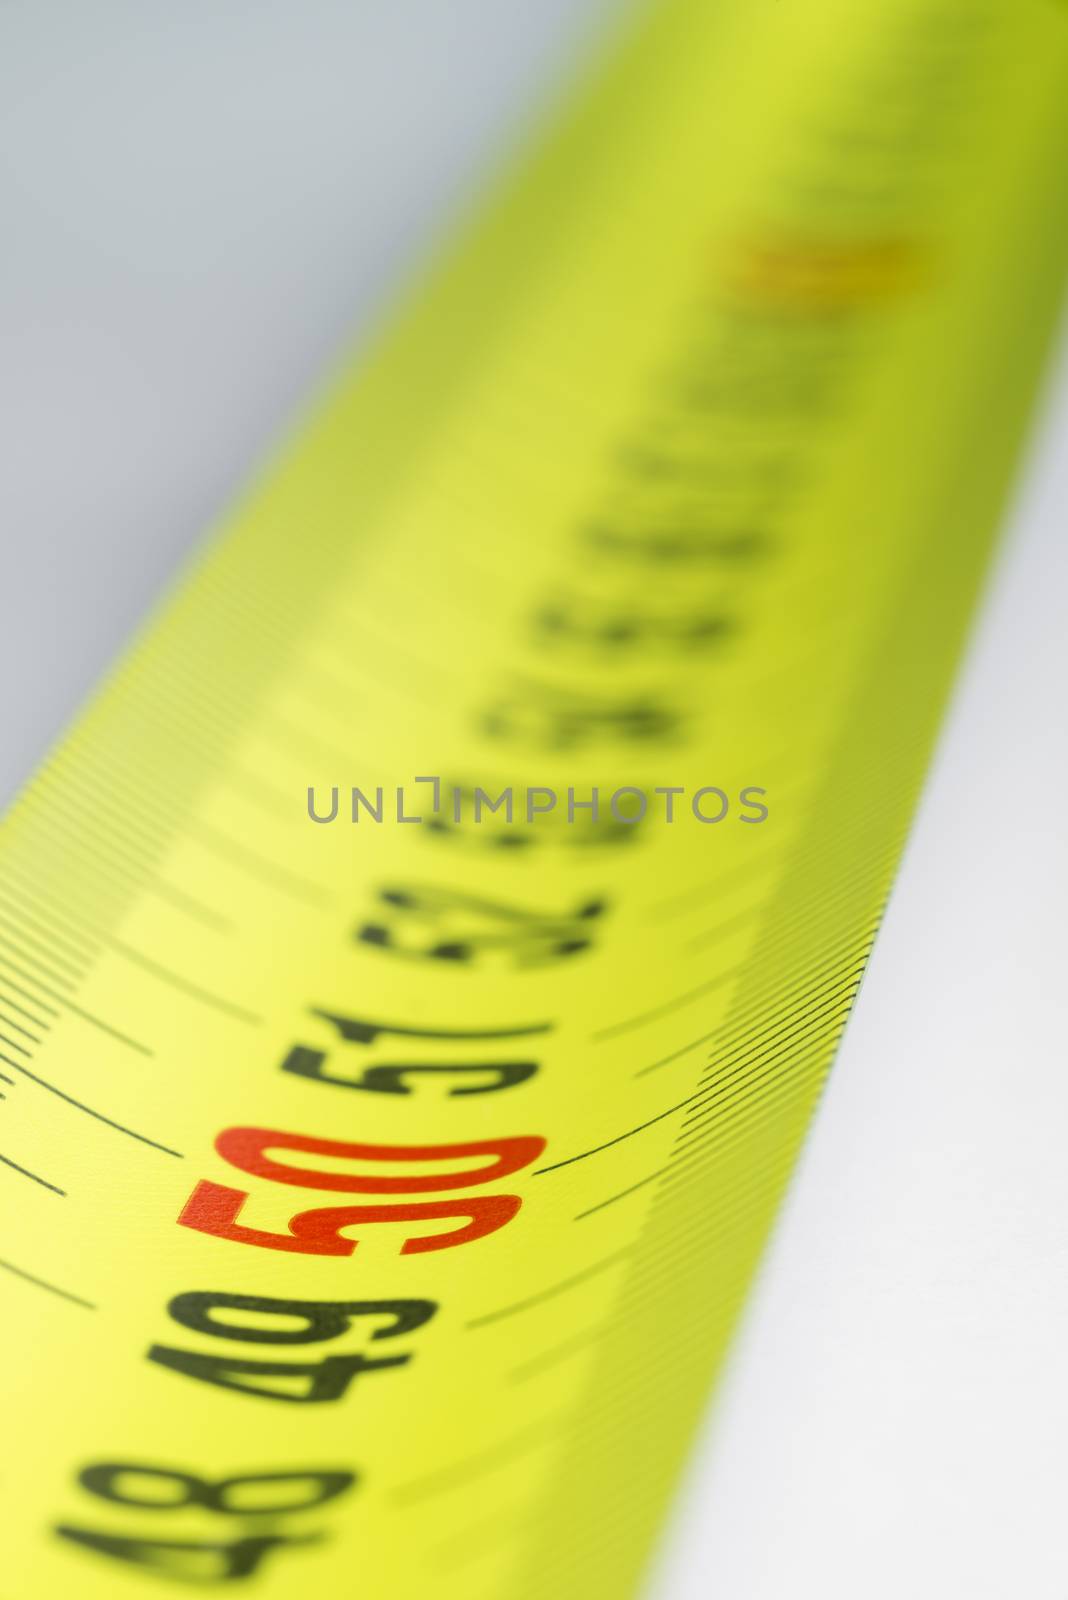 Yellow metal industrial tape measure
 by Tofotografie